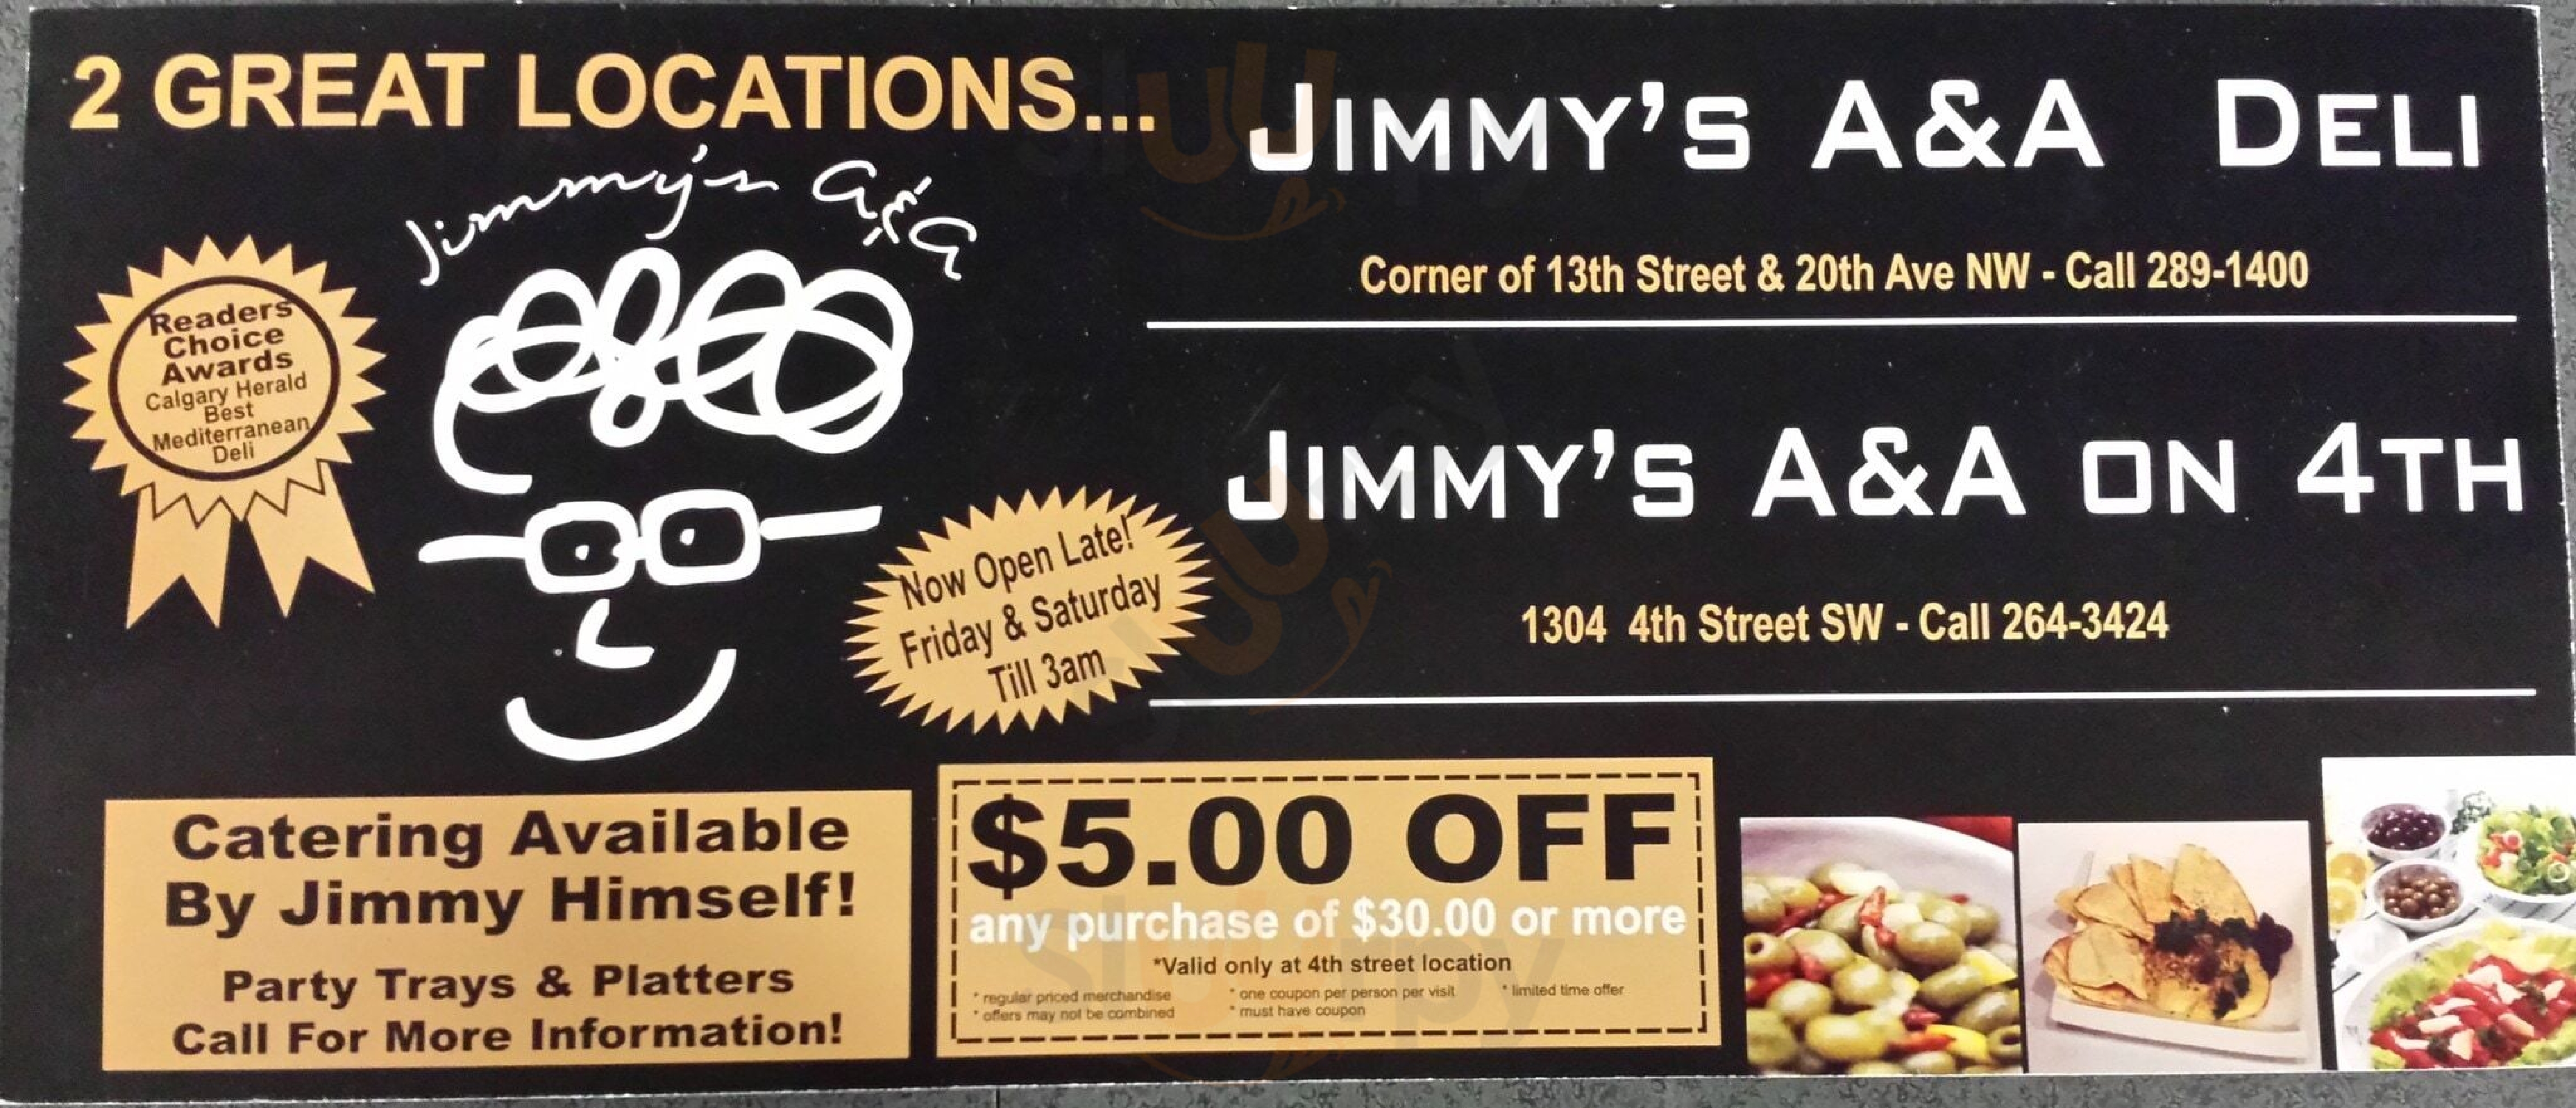 Jimmy's A&a Deli Calgary Menu - 1